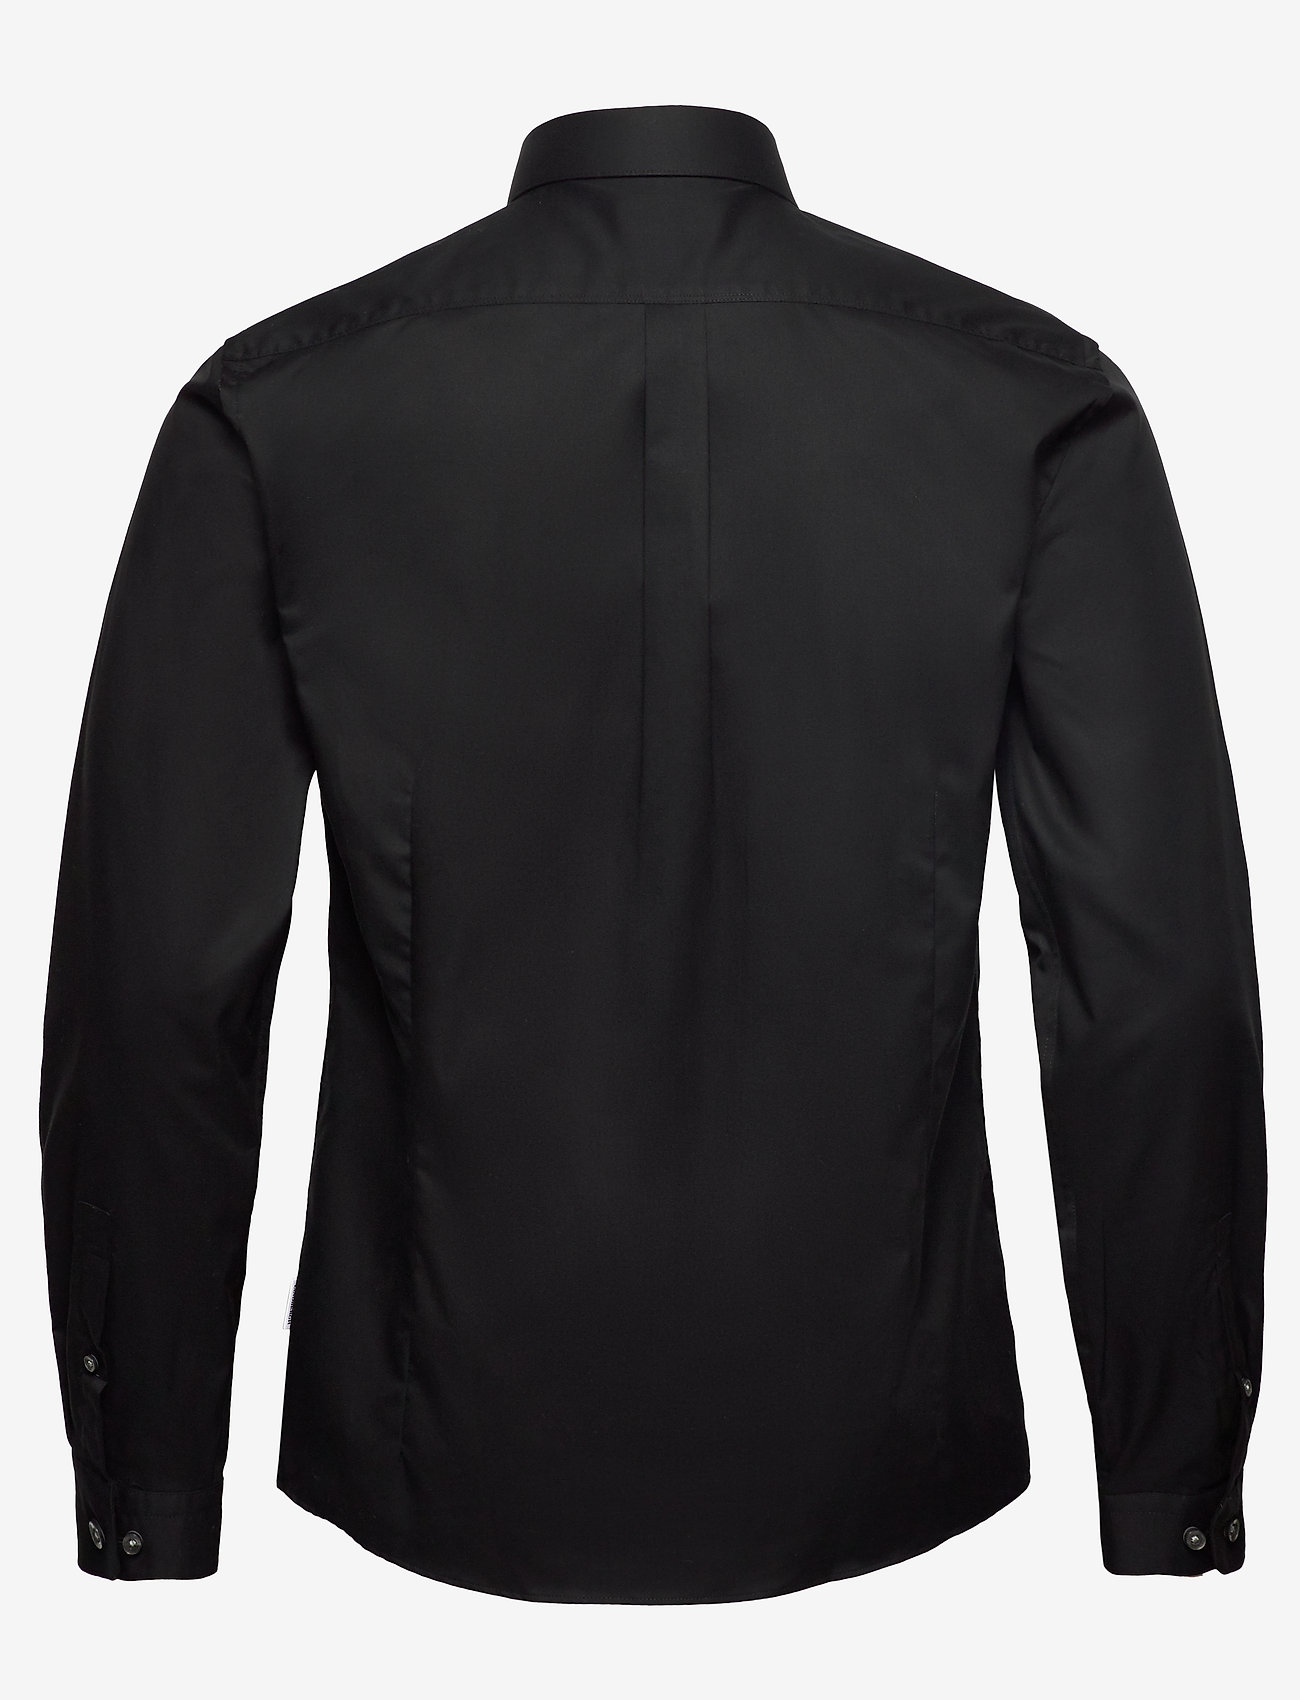 Lindbergh - Plain twill stretch shirt L/S - basic skjorter - black - 1